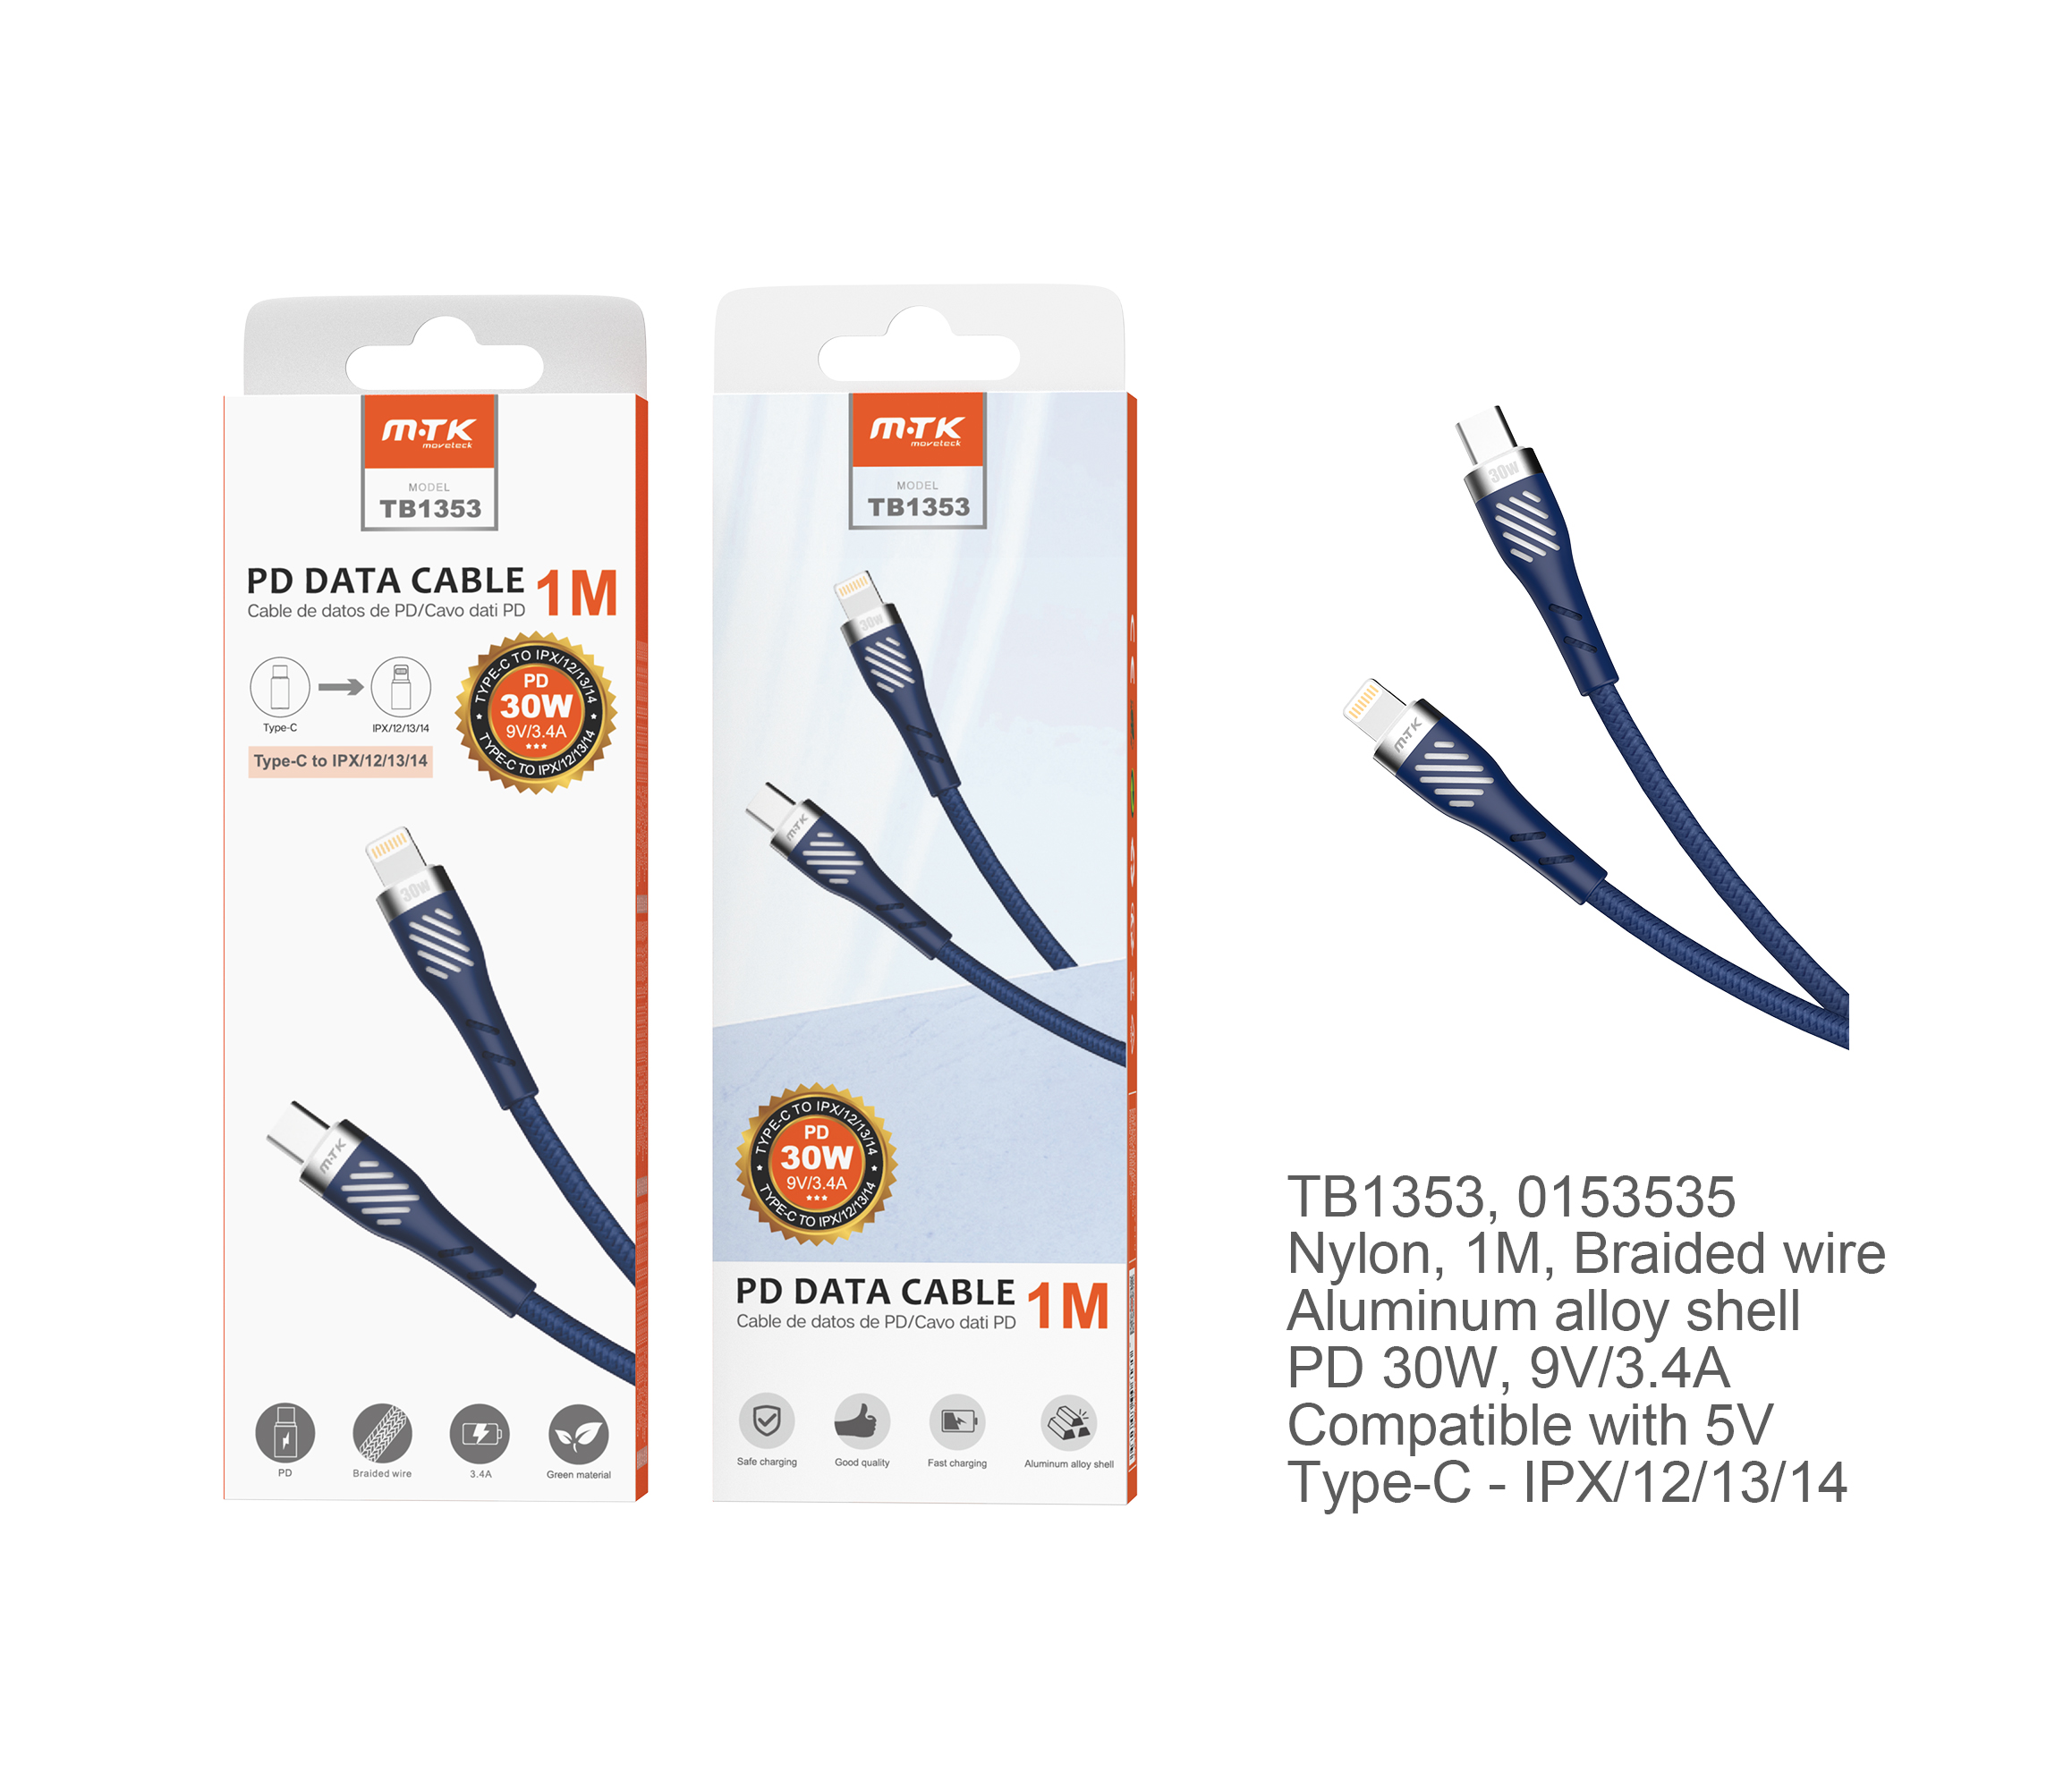 TB1353 AZ Cable de Datos Camyl nylon trenzado , Type-C a Lightning , Carga Rapida PD 30W/9V/3.4A , Cable 1M , Azul